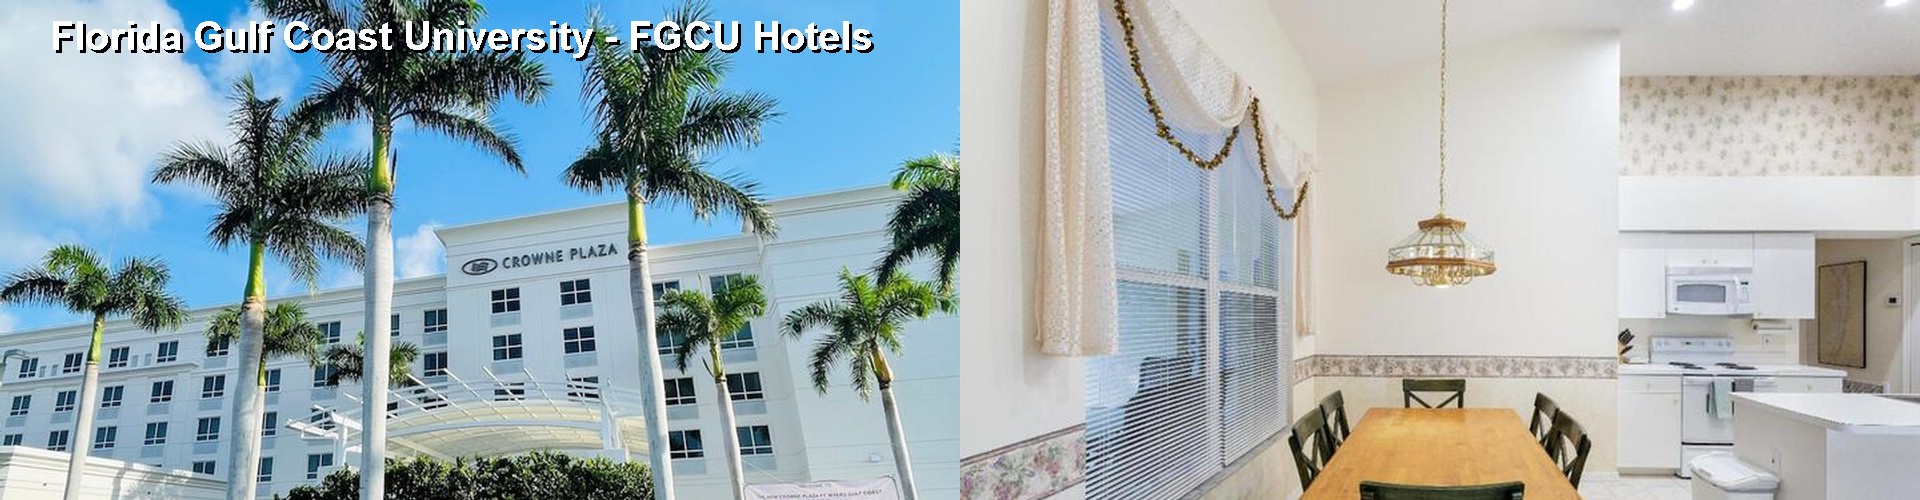 5 Best Hotels near Florida Gulf Coast University - FGCU